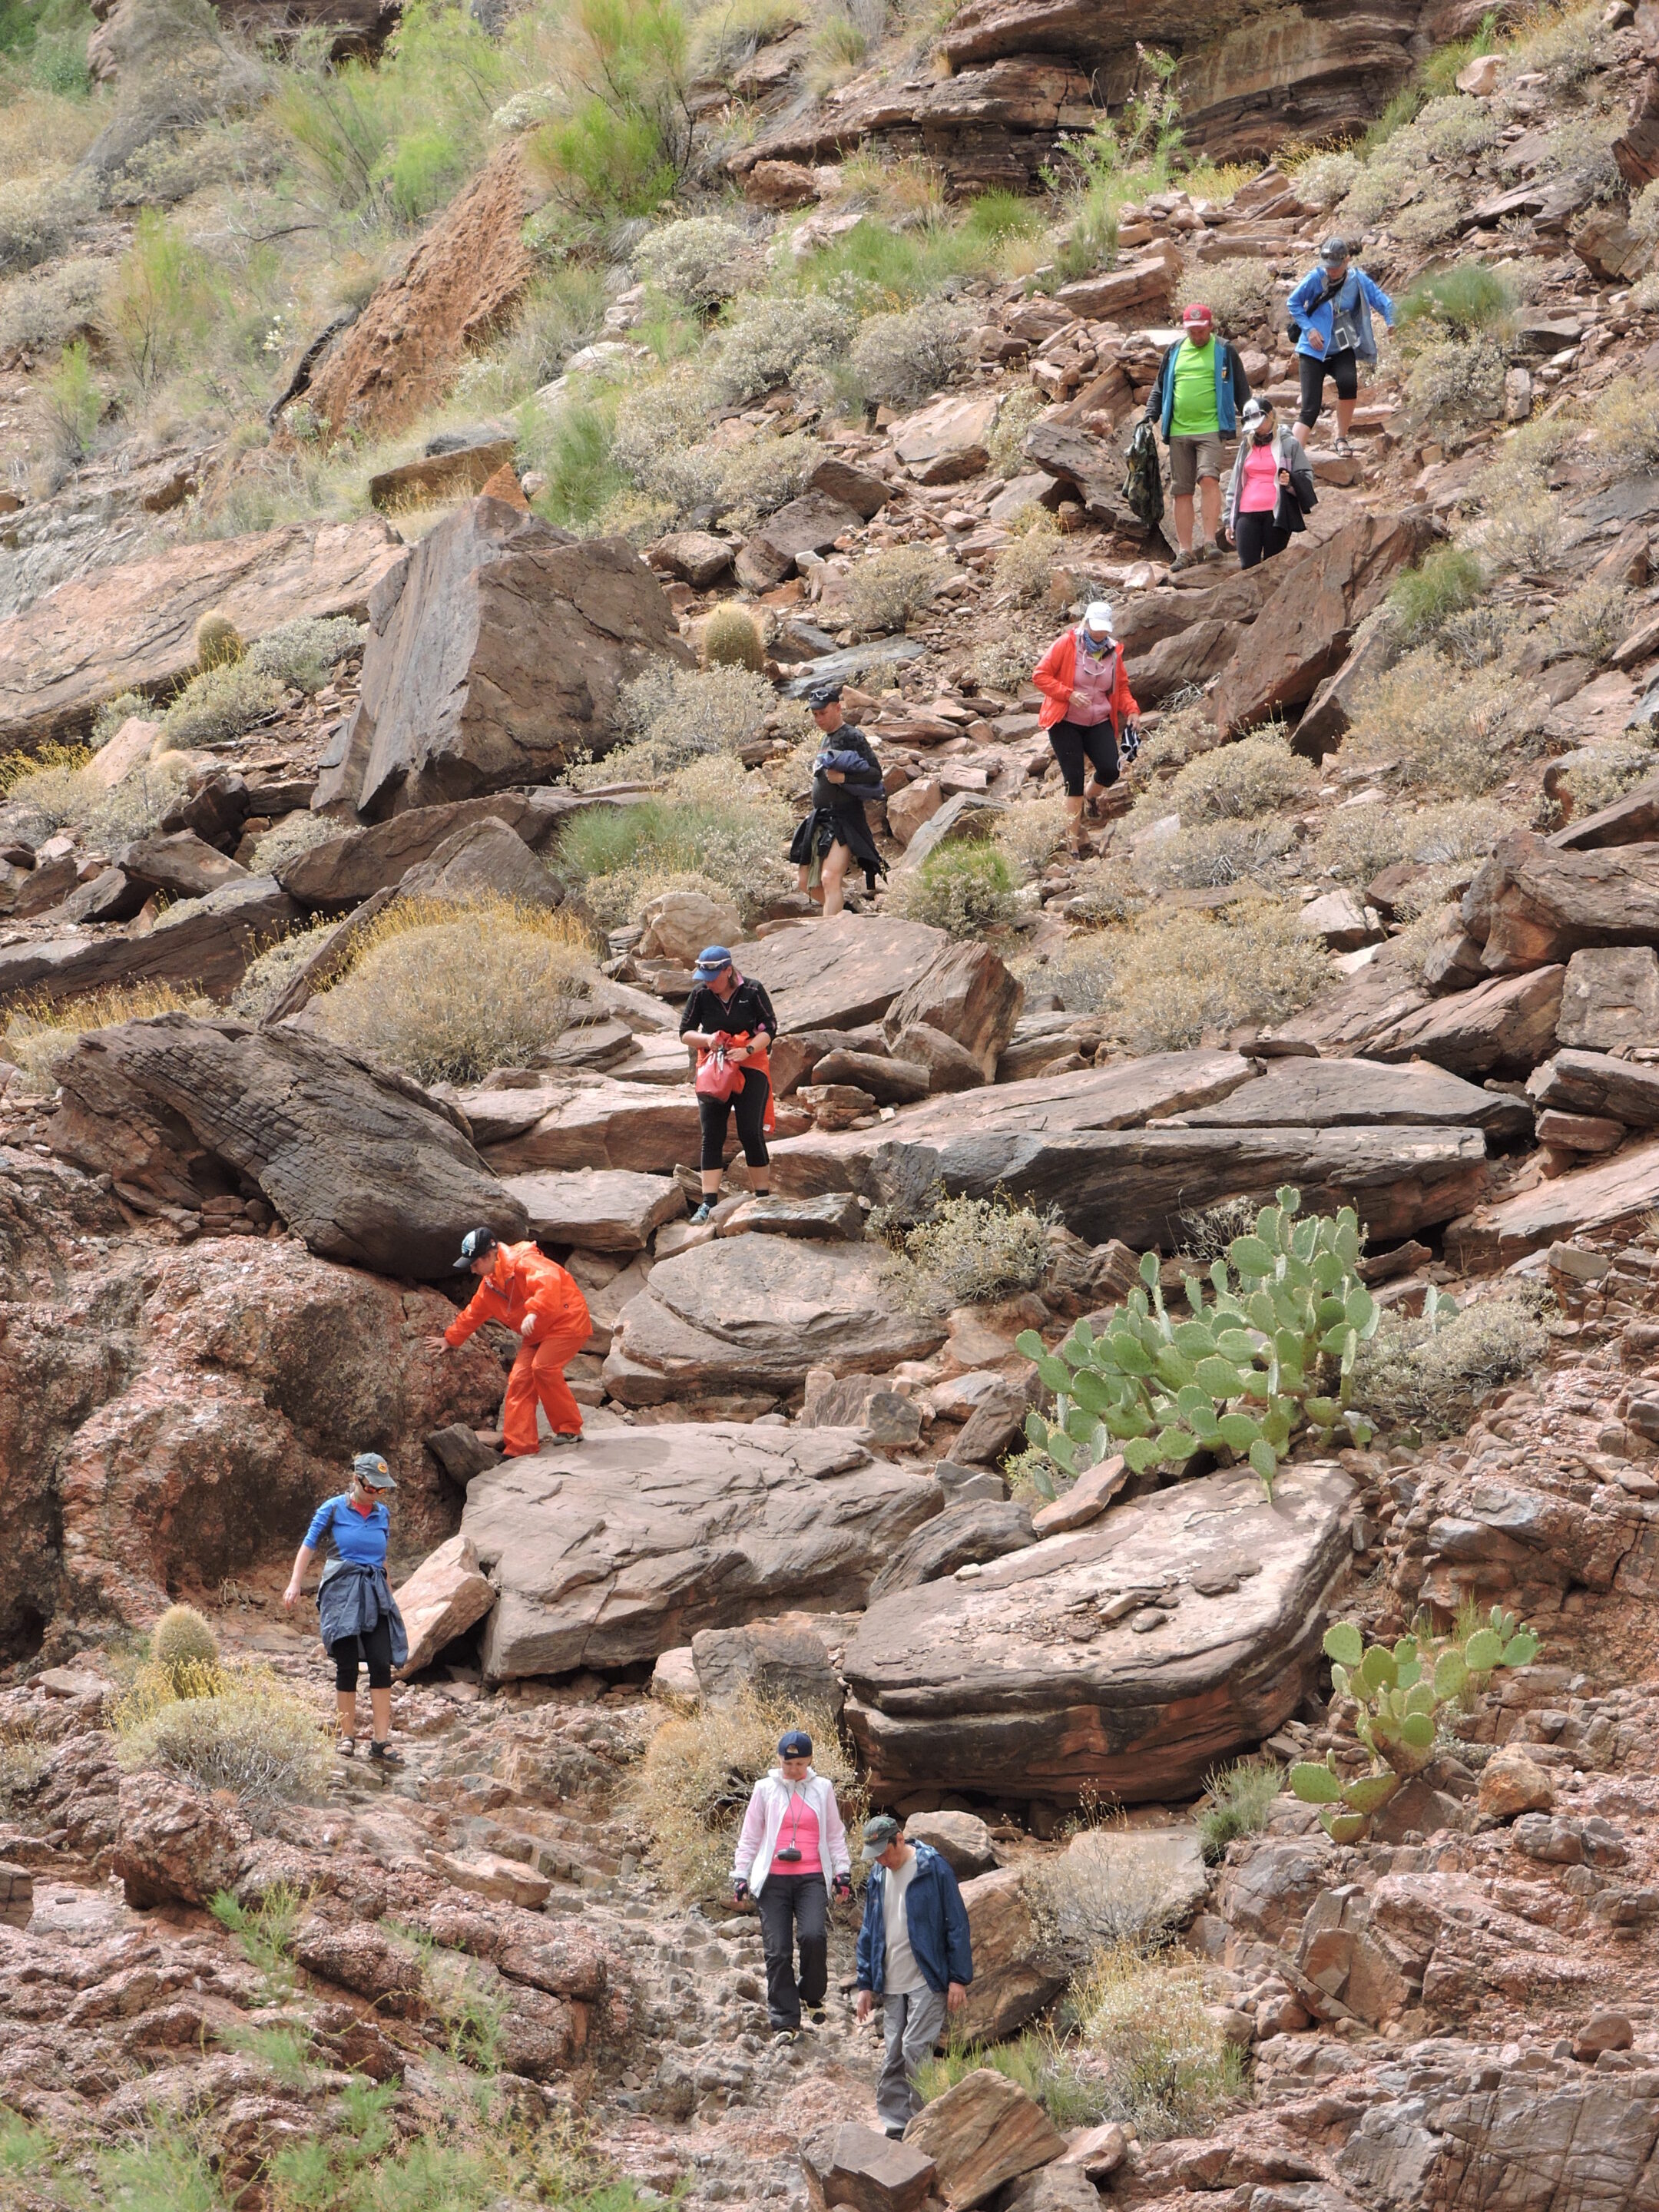 People hiking a steep trail in the Grand Canyon. Photo credit: Jim Beregi.